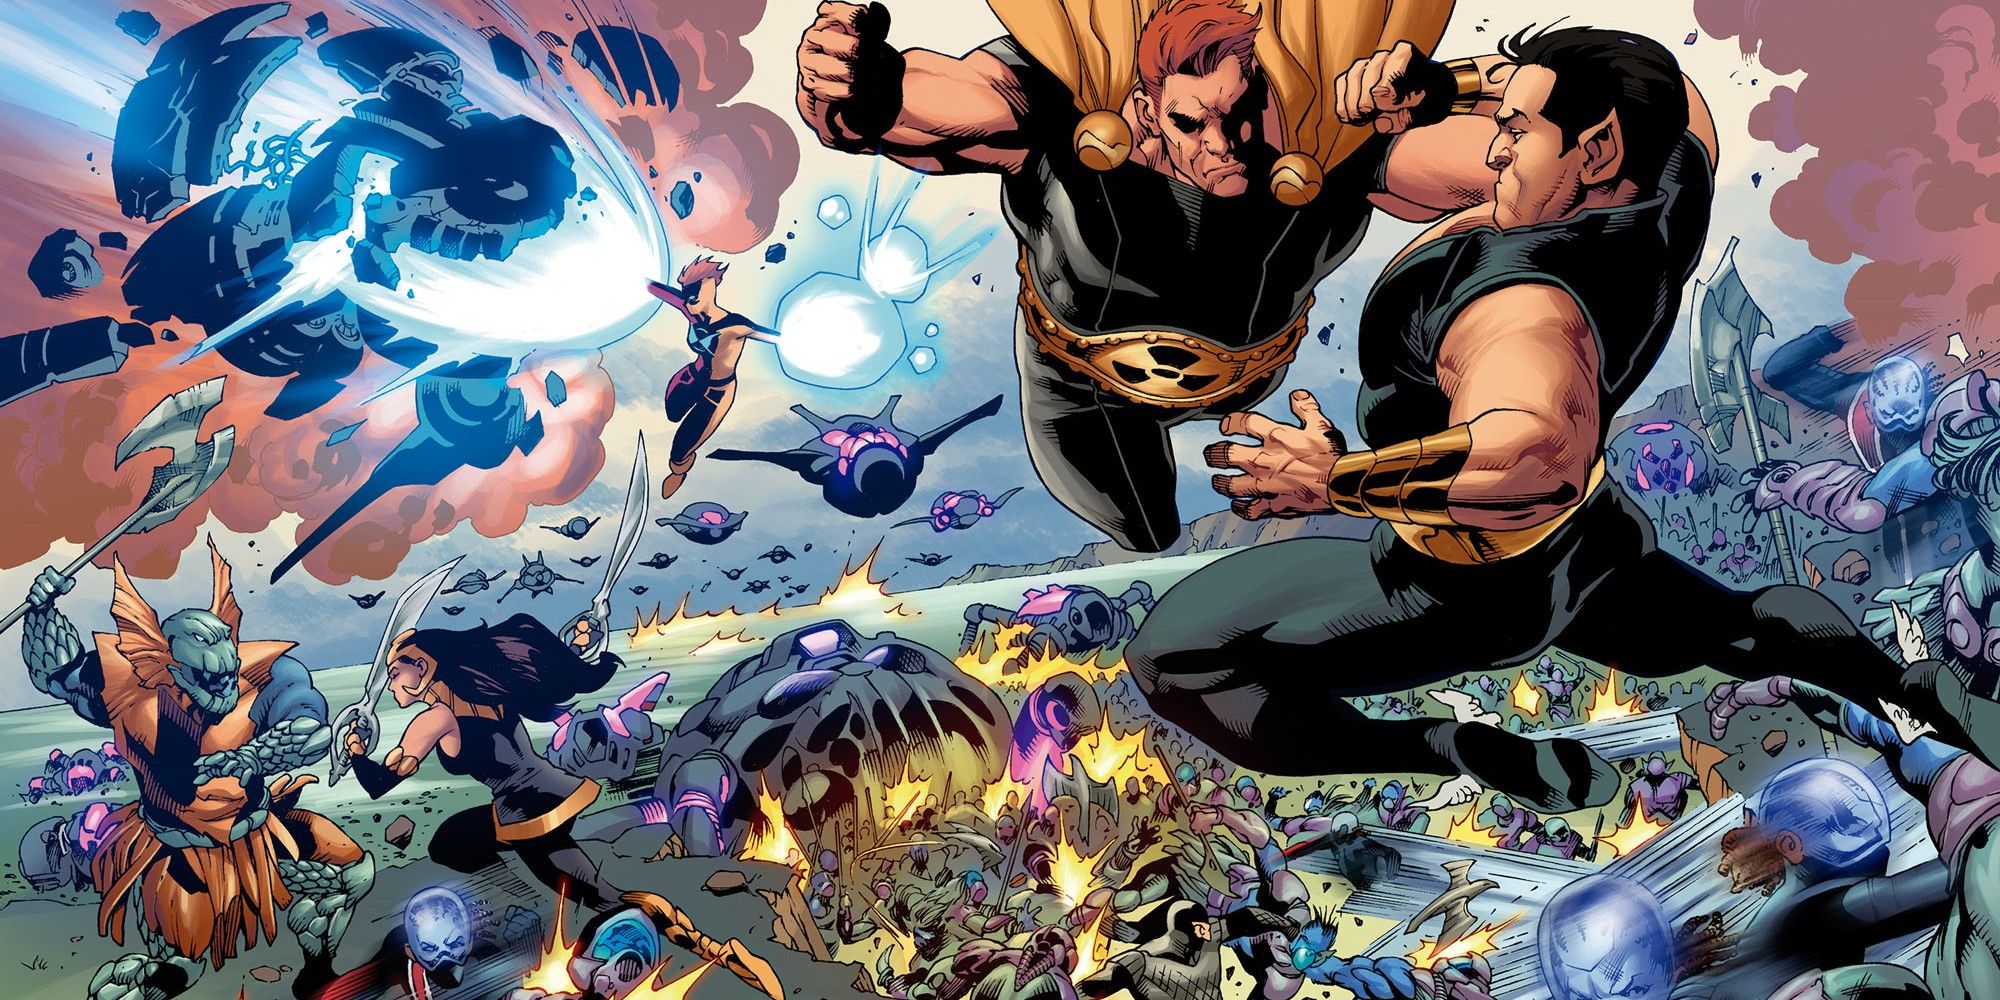 Squadron Supreme fights Namor in Marvel Comics